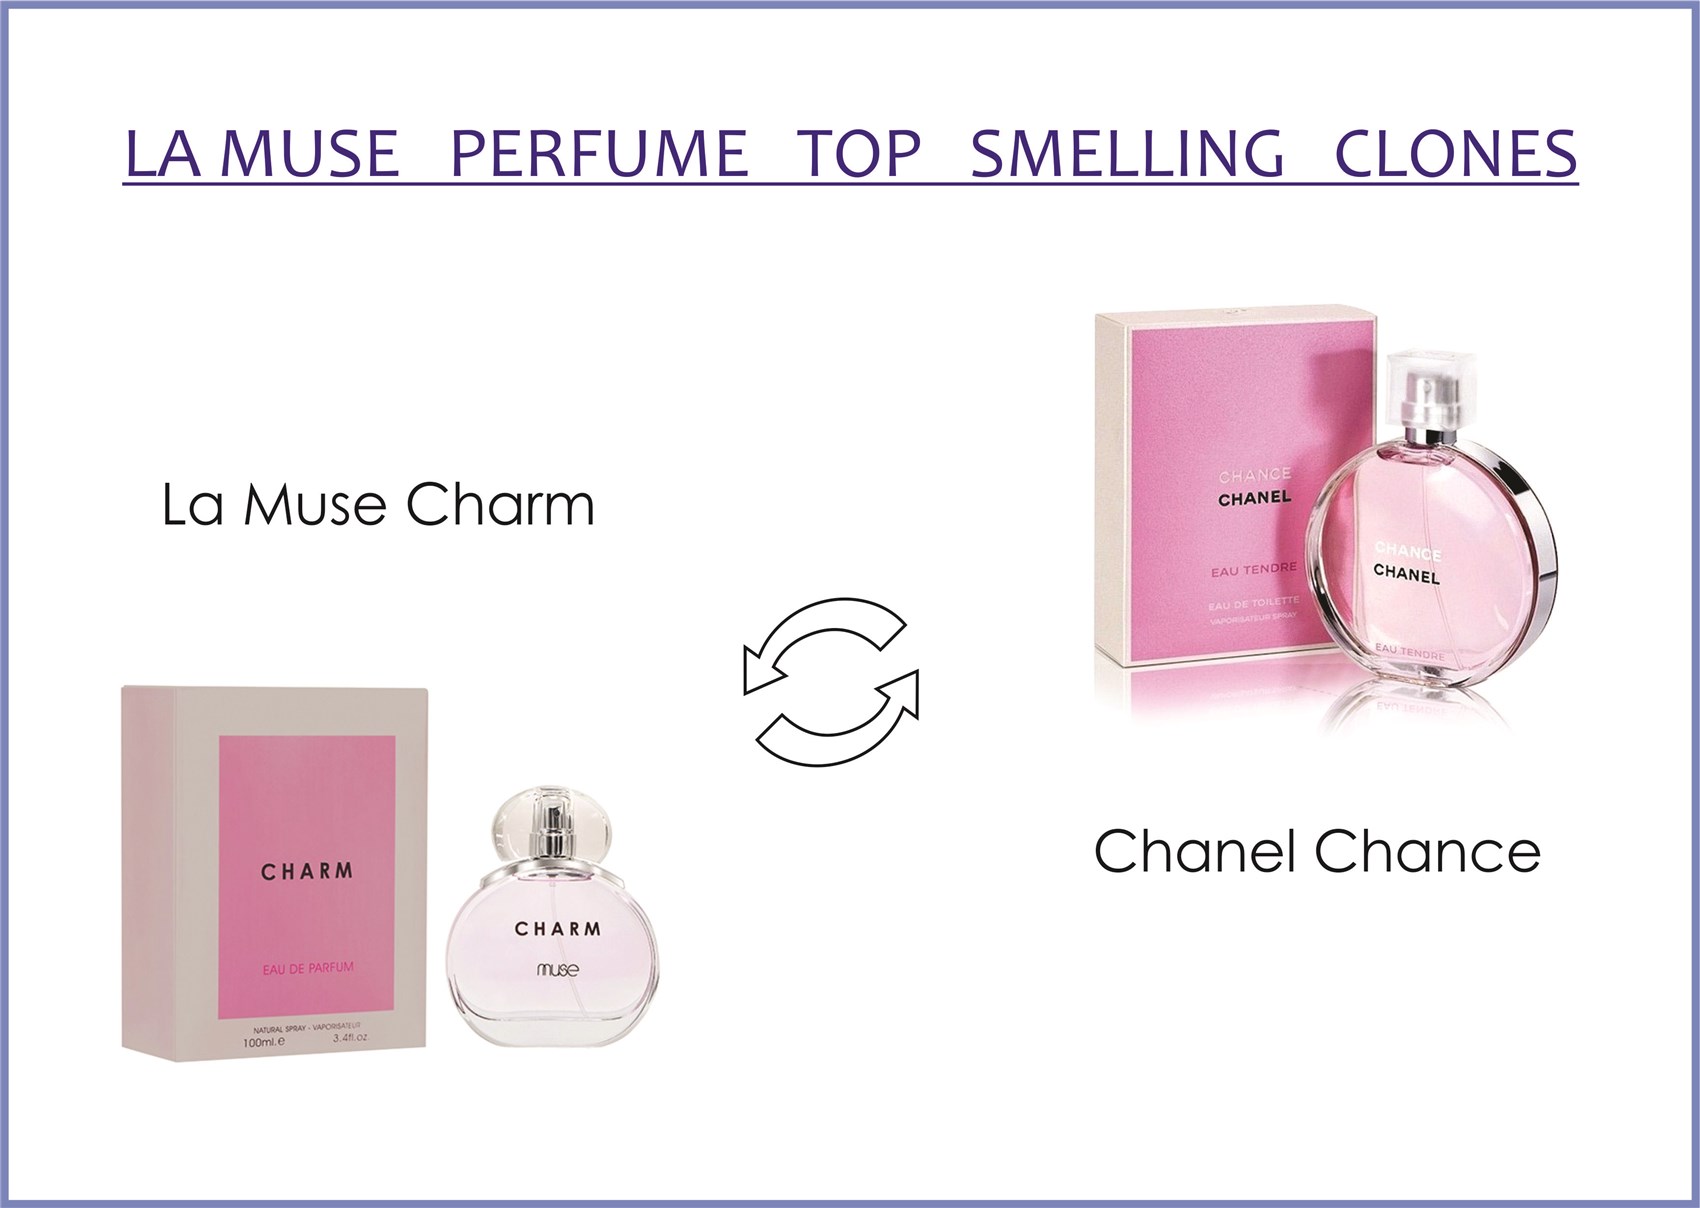 La Muse Perfumes Top Smelling Clones. 